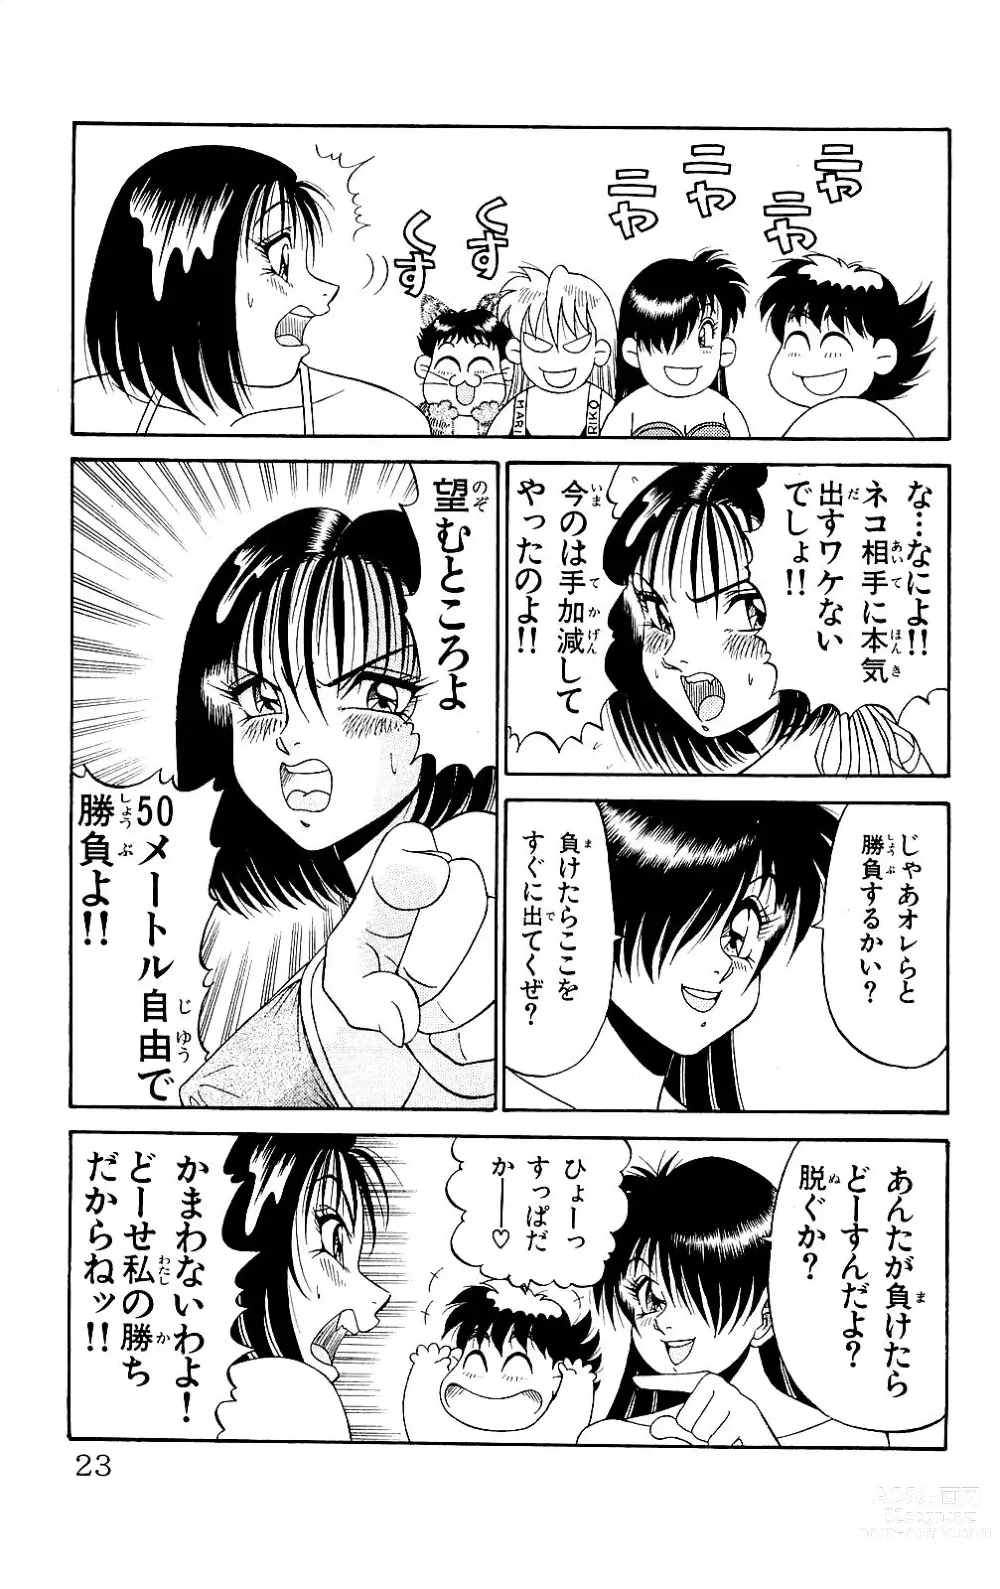 Page 21 of manga Orette Piyoritan 06